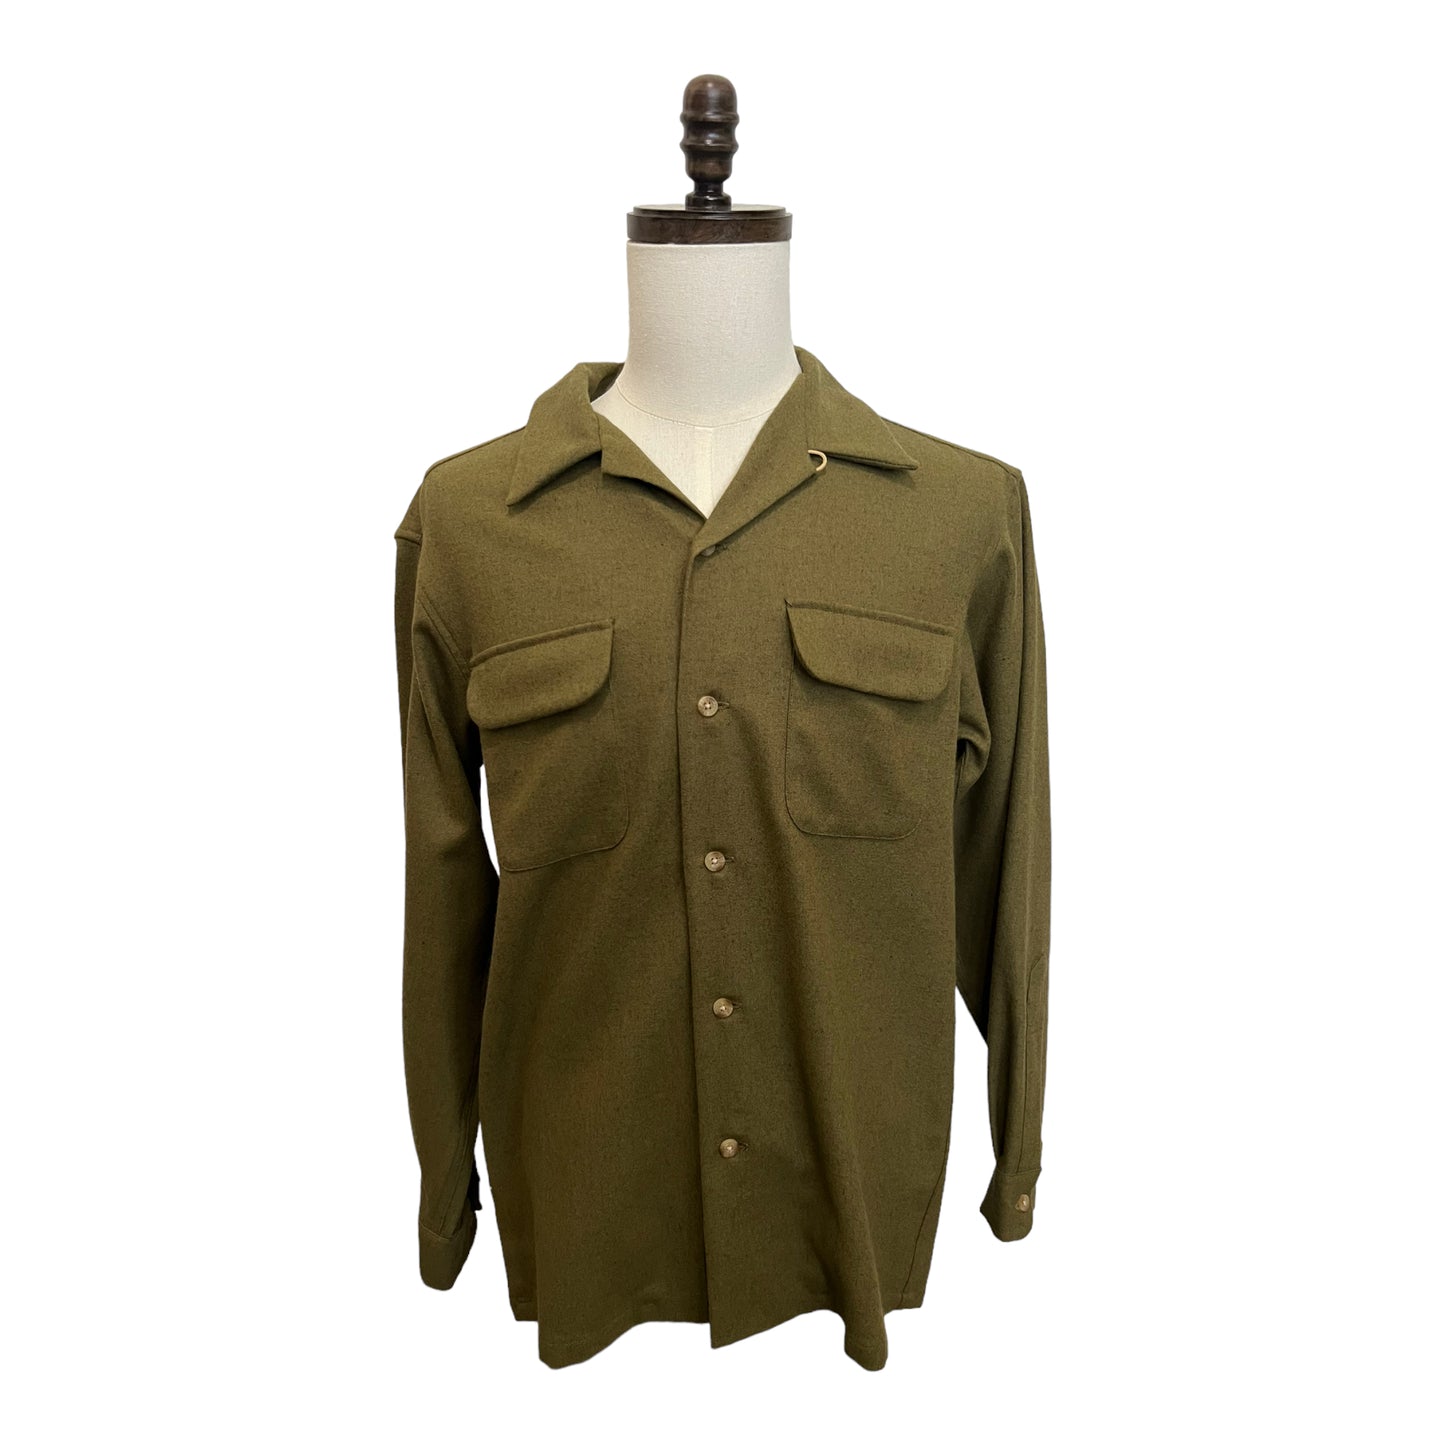 Pendleton Original Board Shirt - Olive Green